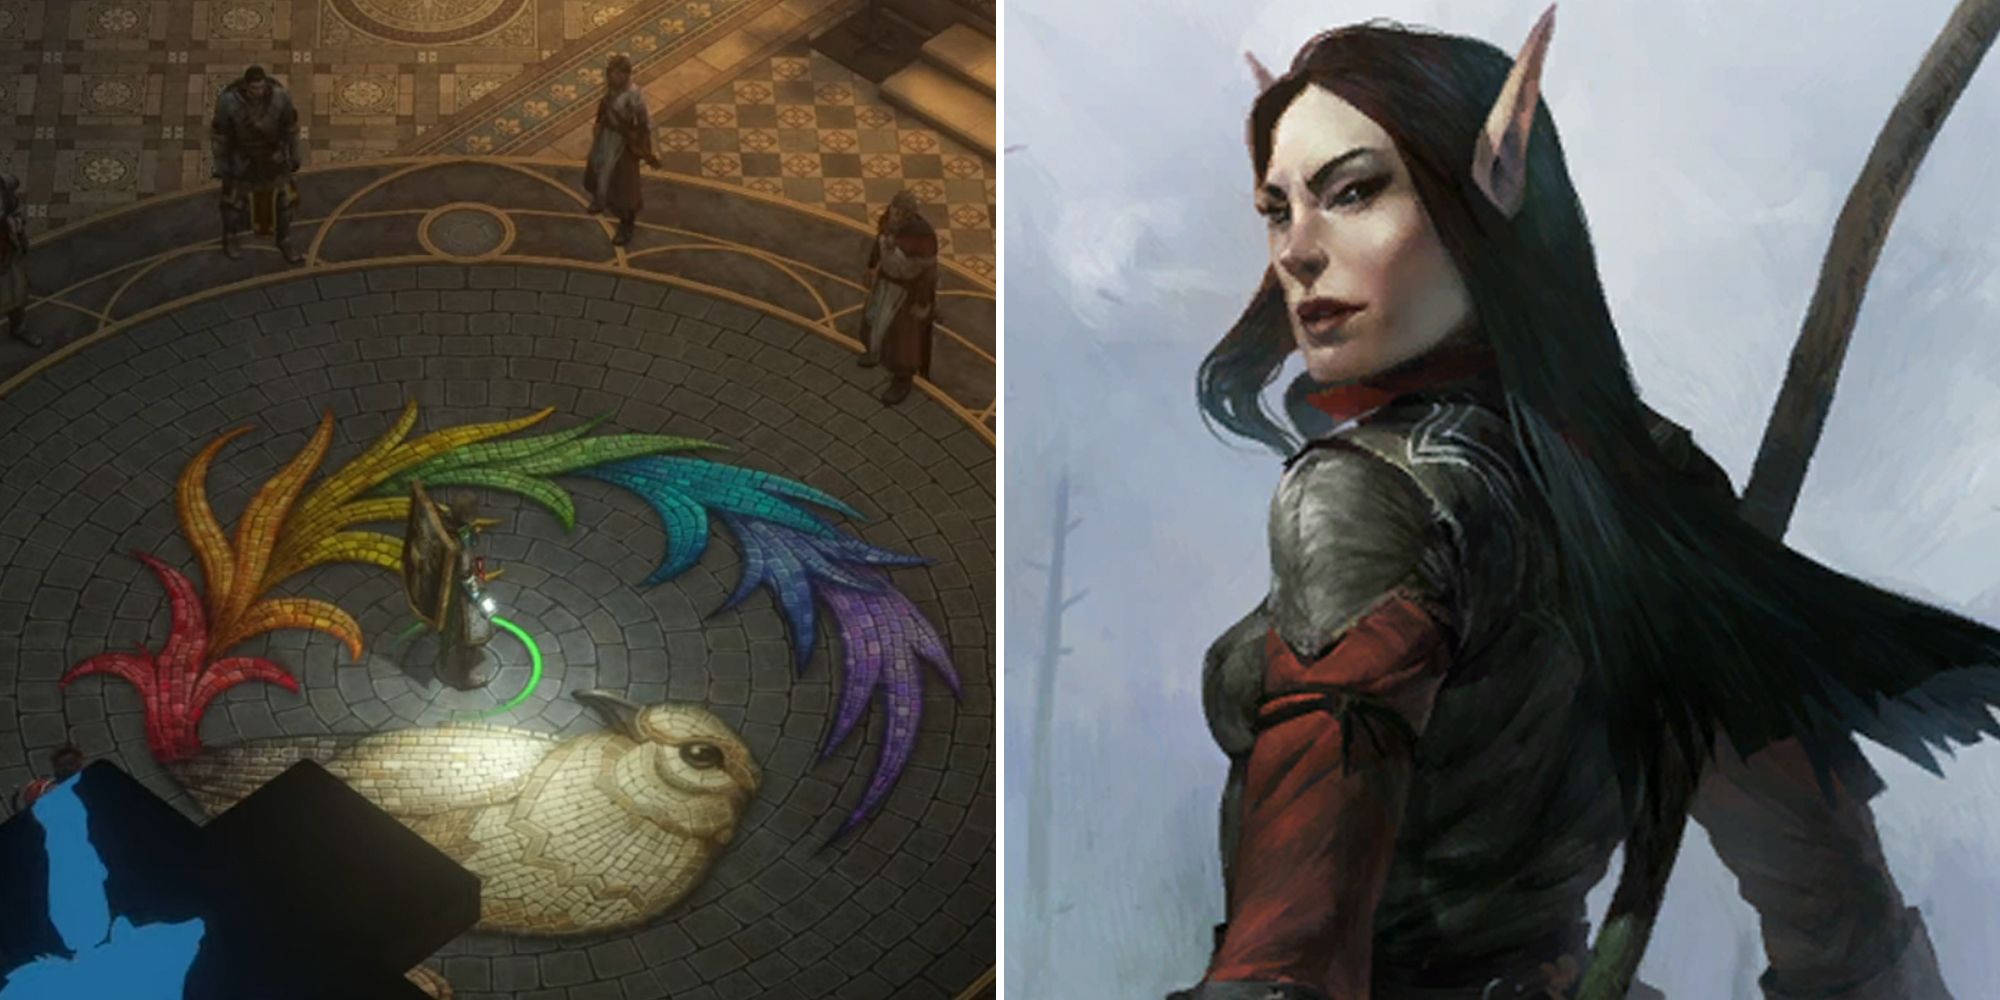 pathfinder: kingmaker split image. screenshot of game on left, character portrait on right.